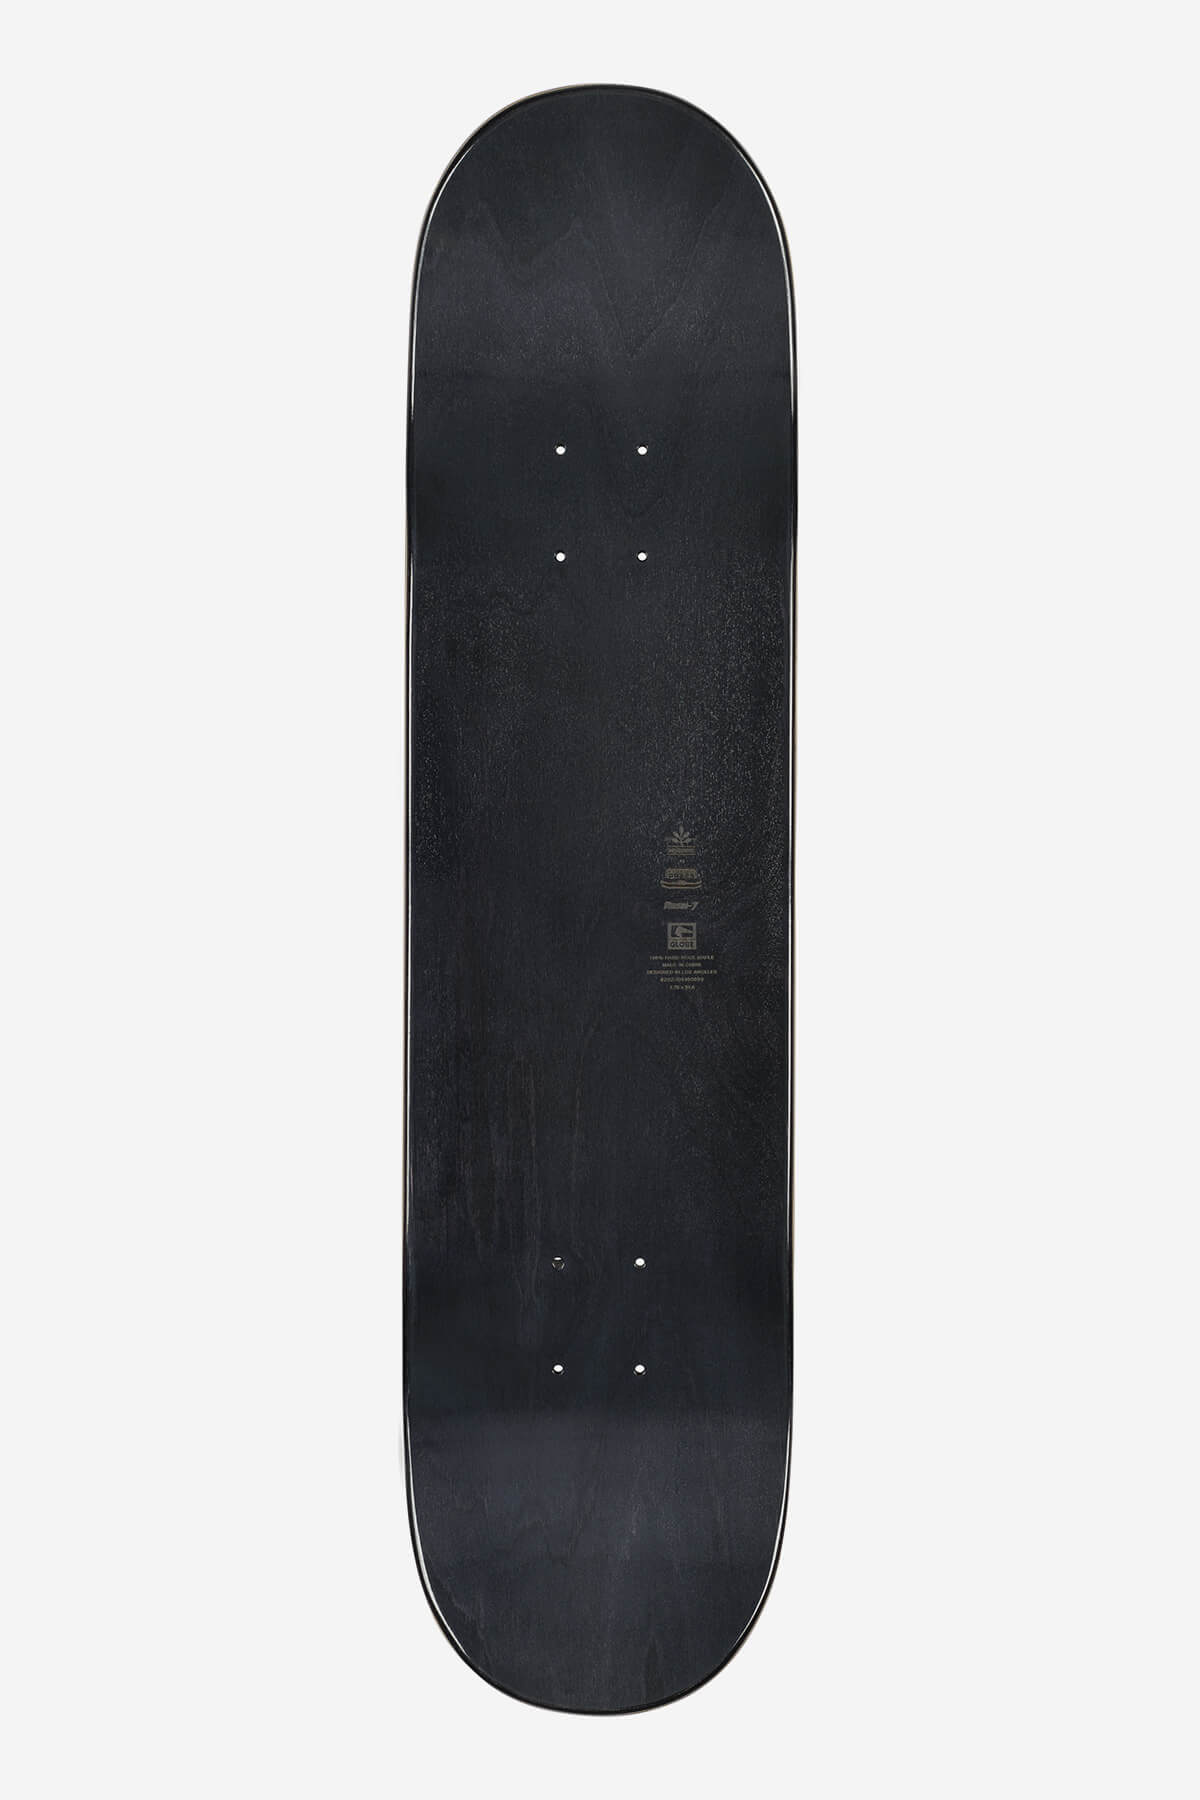 Globe - G1 Lineform - Noir - 7,75 pouces Skateboard Deck